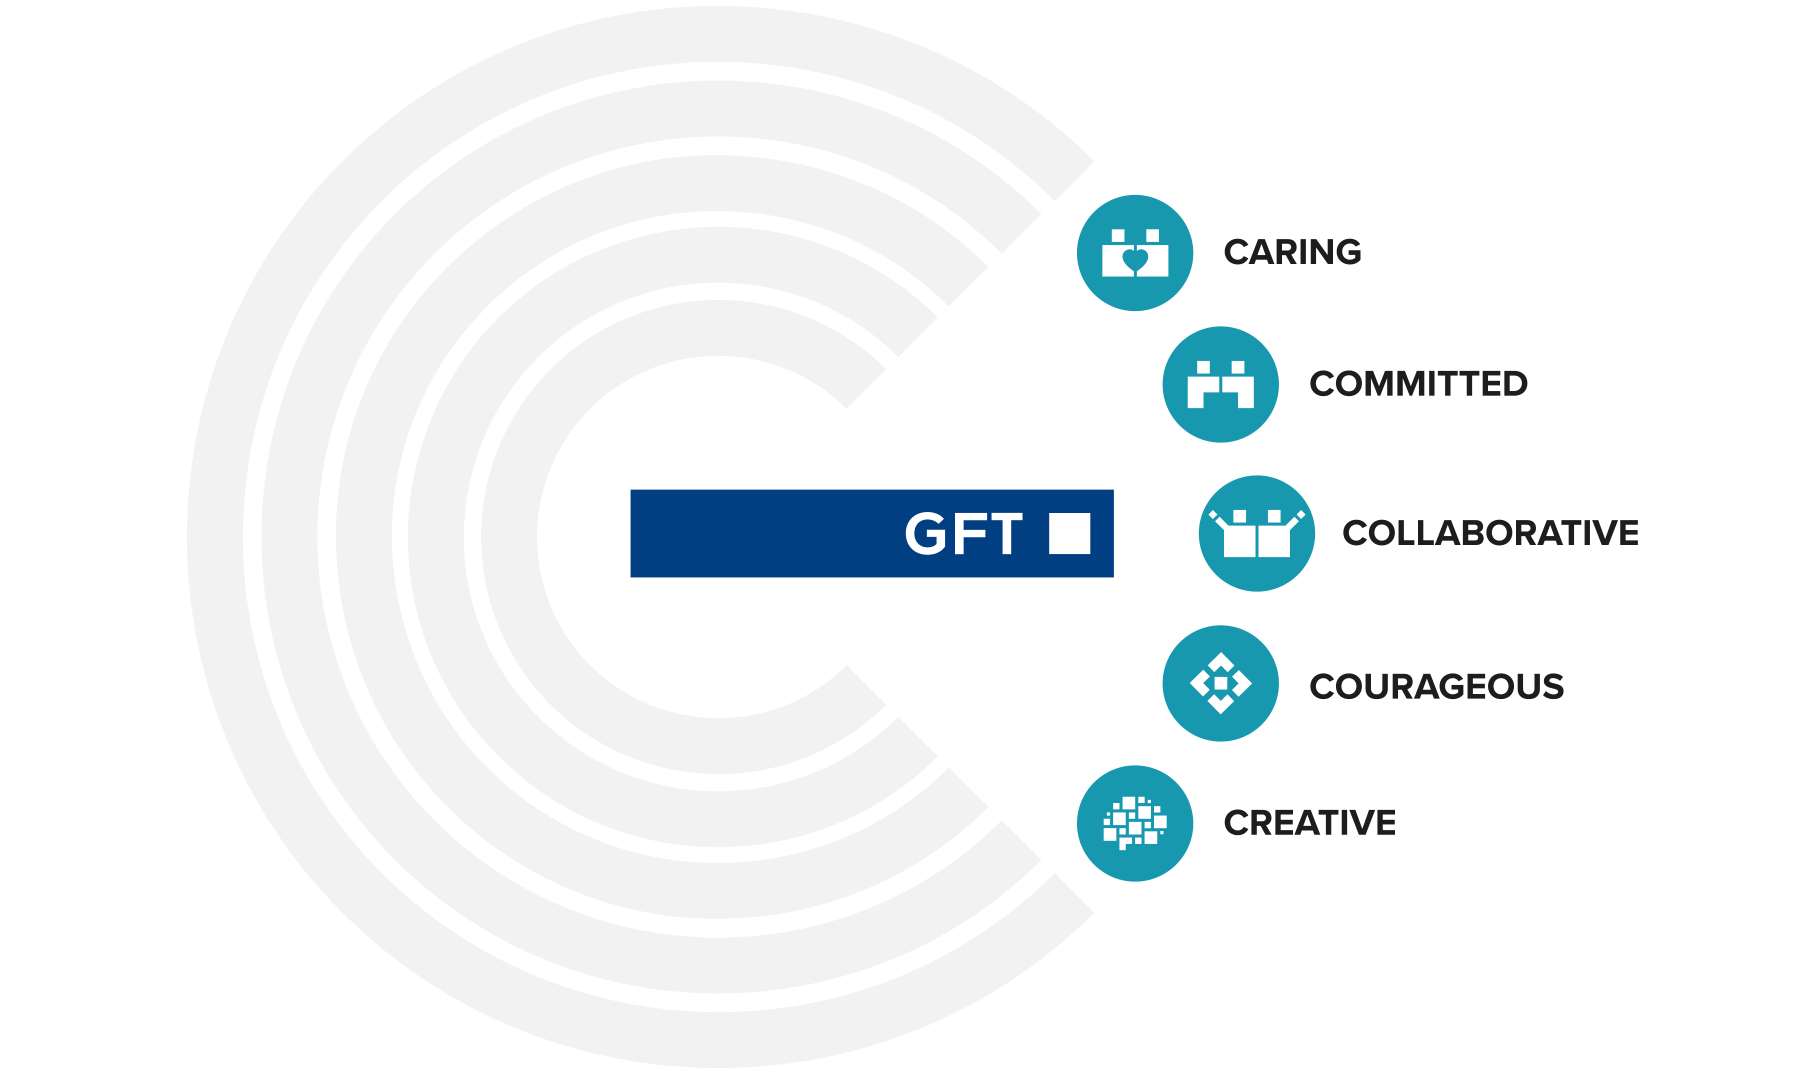 gft-infographic-core-values